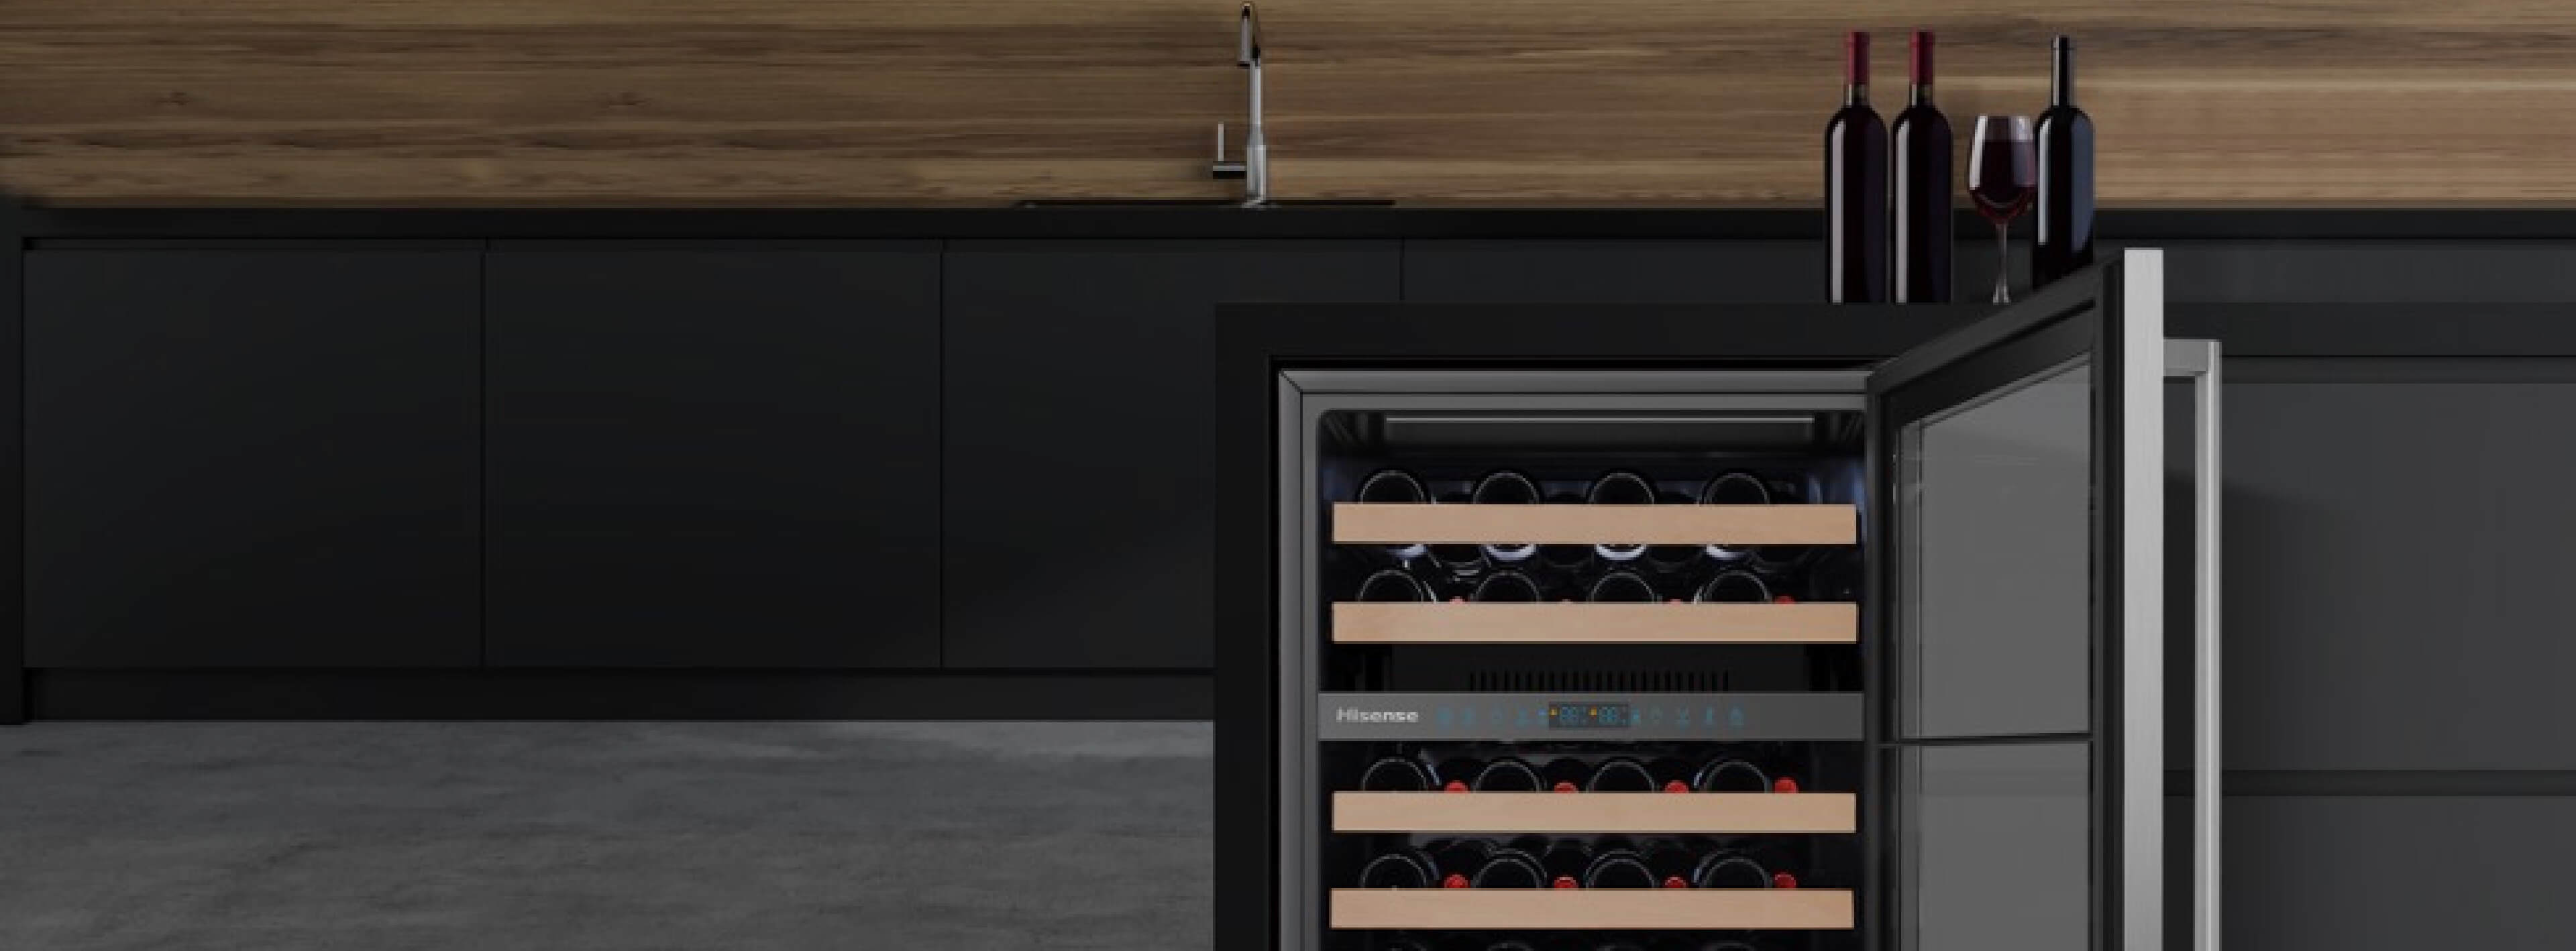 Hisense Wine Cabinet 46-Bottle Dual Zone Wine Cooler